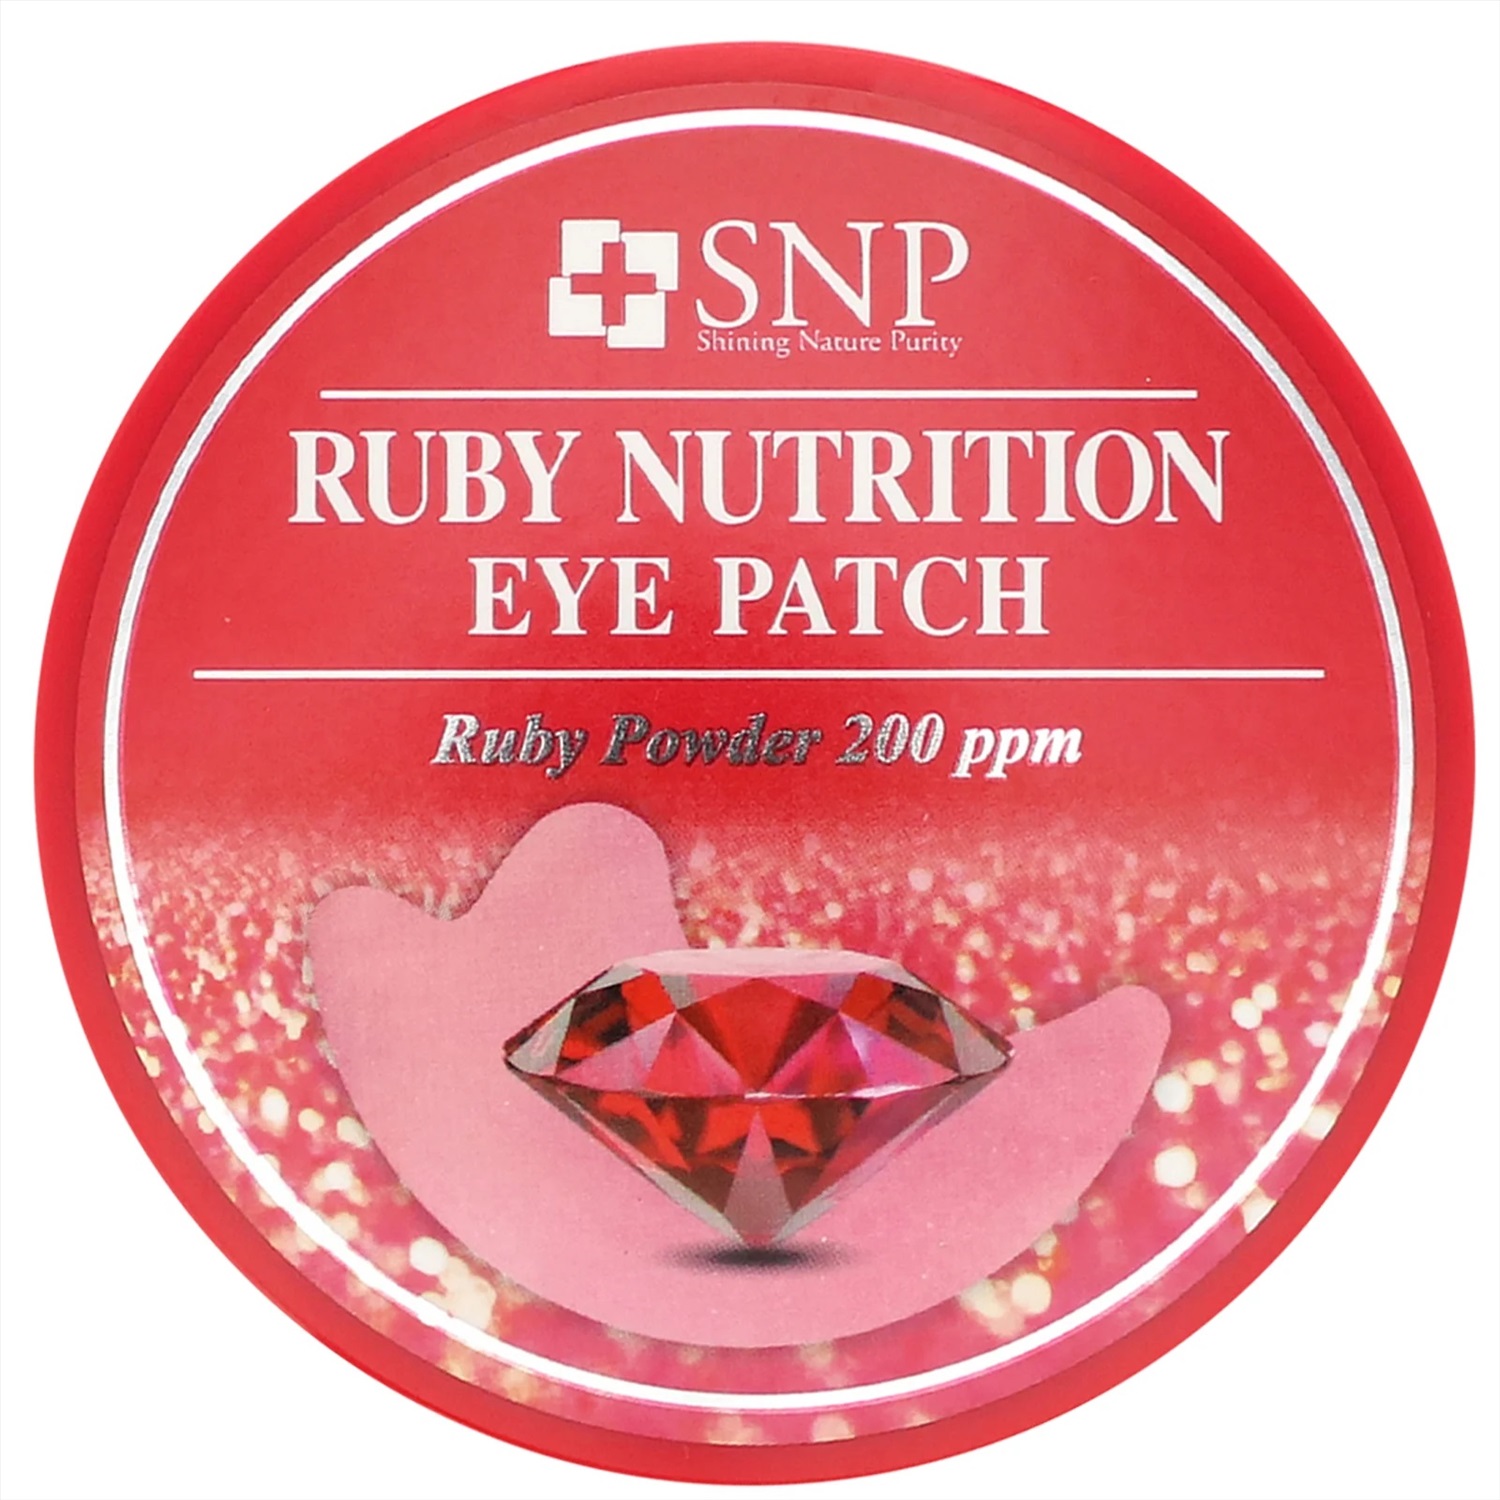 snp ruby nutrition eye patch